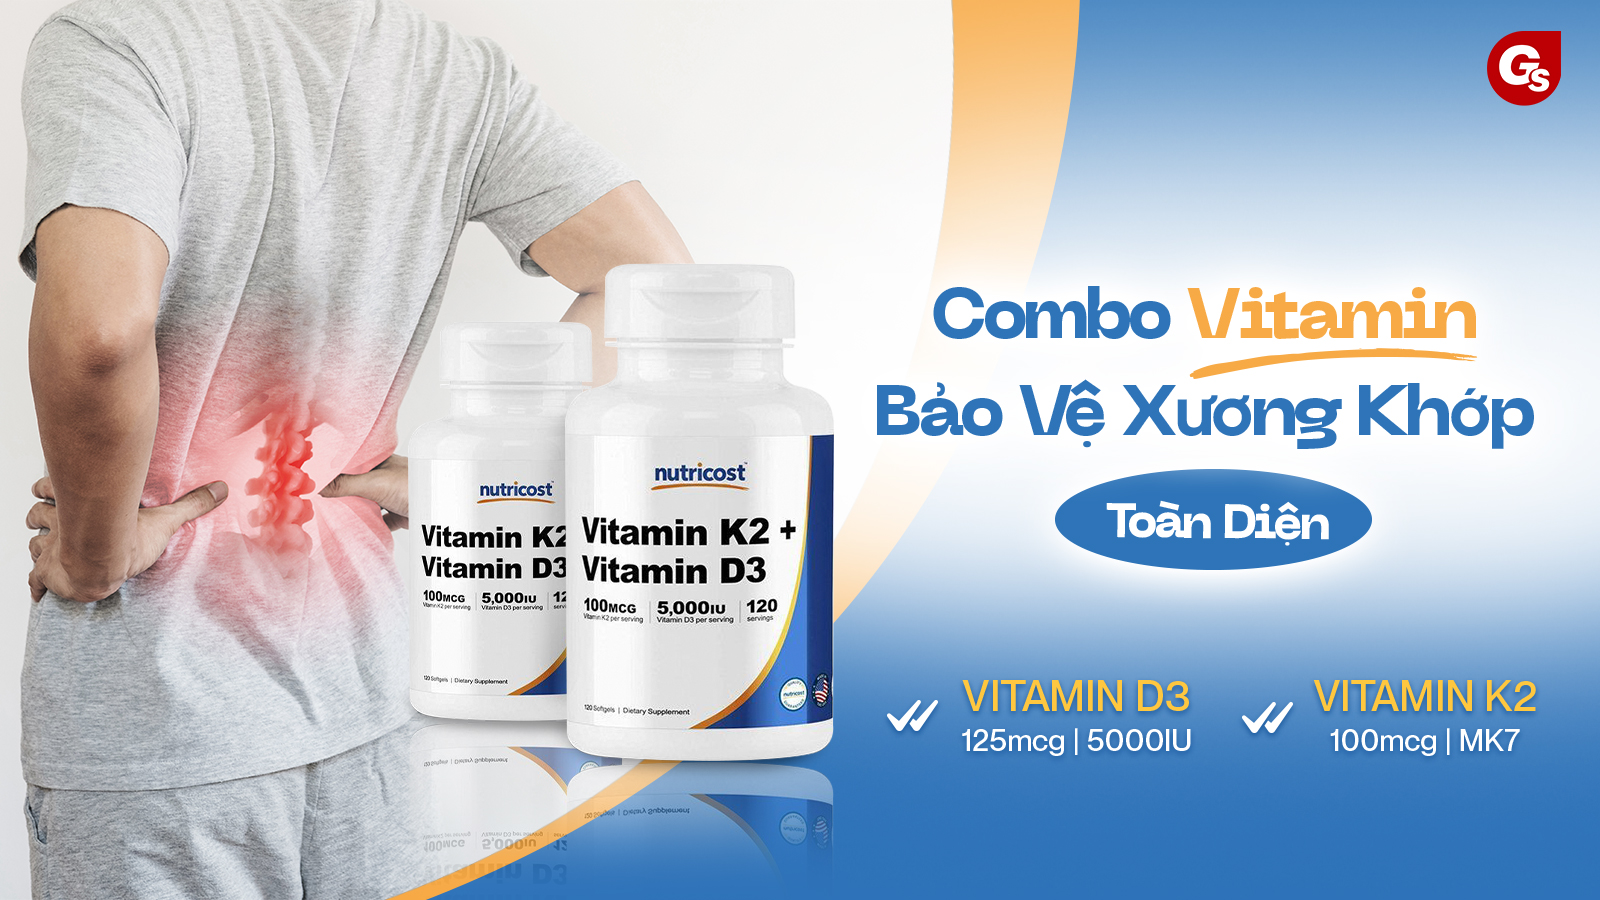 nutricost-vitamin-k2-vitamin-d3-suc-khoe-xuong-khop-gymstore